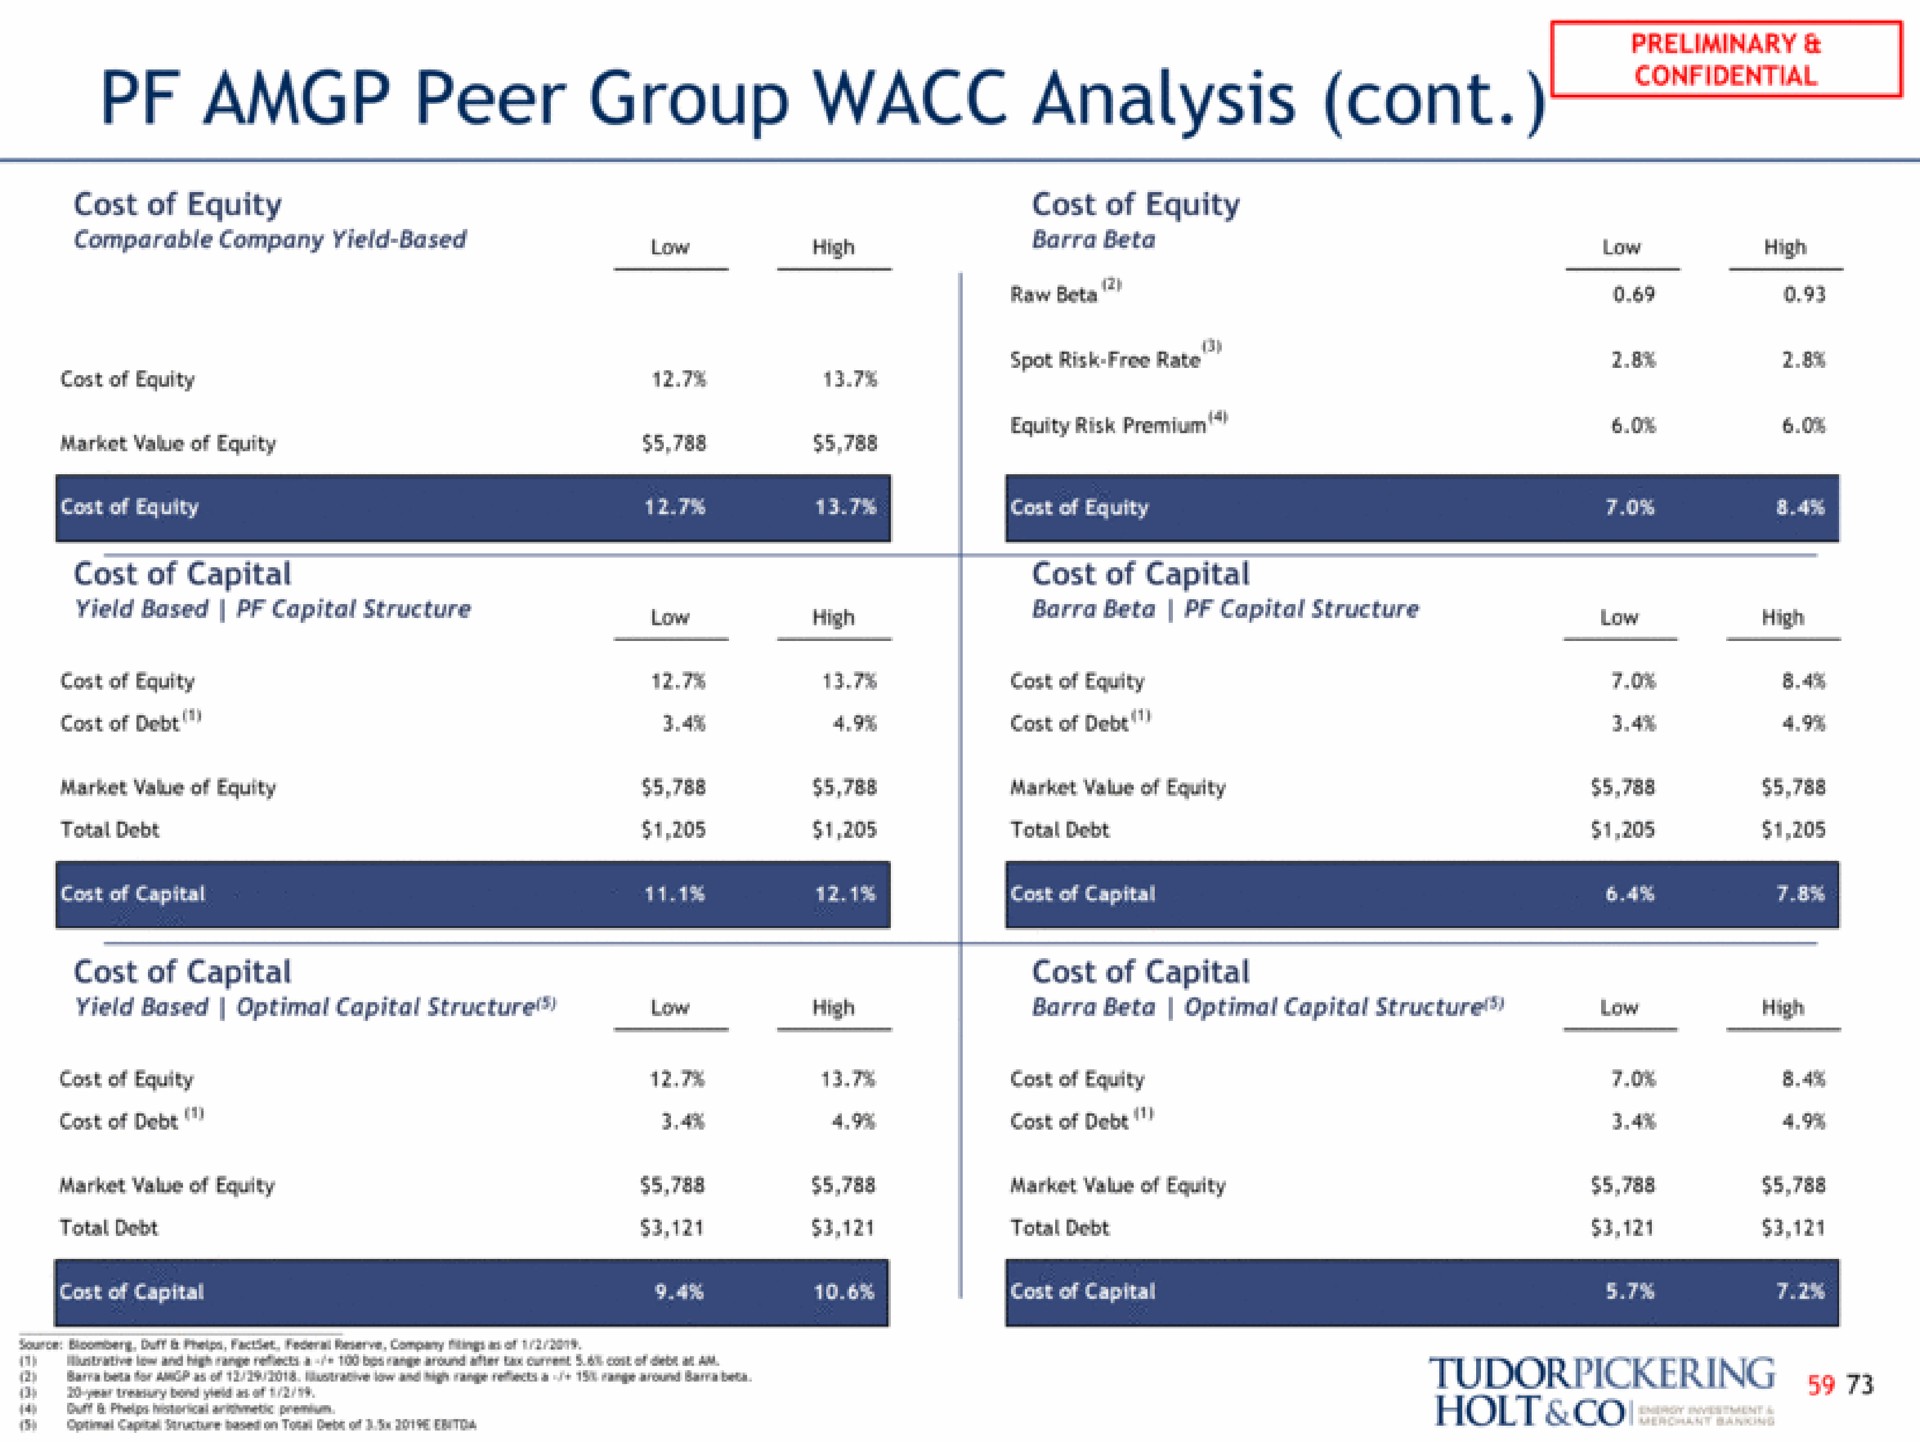 peer group analysis yew holt | Tudor, Pickering, Holt & Co